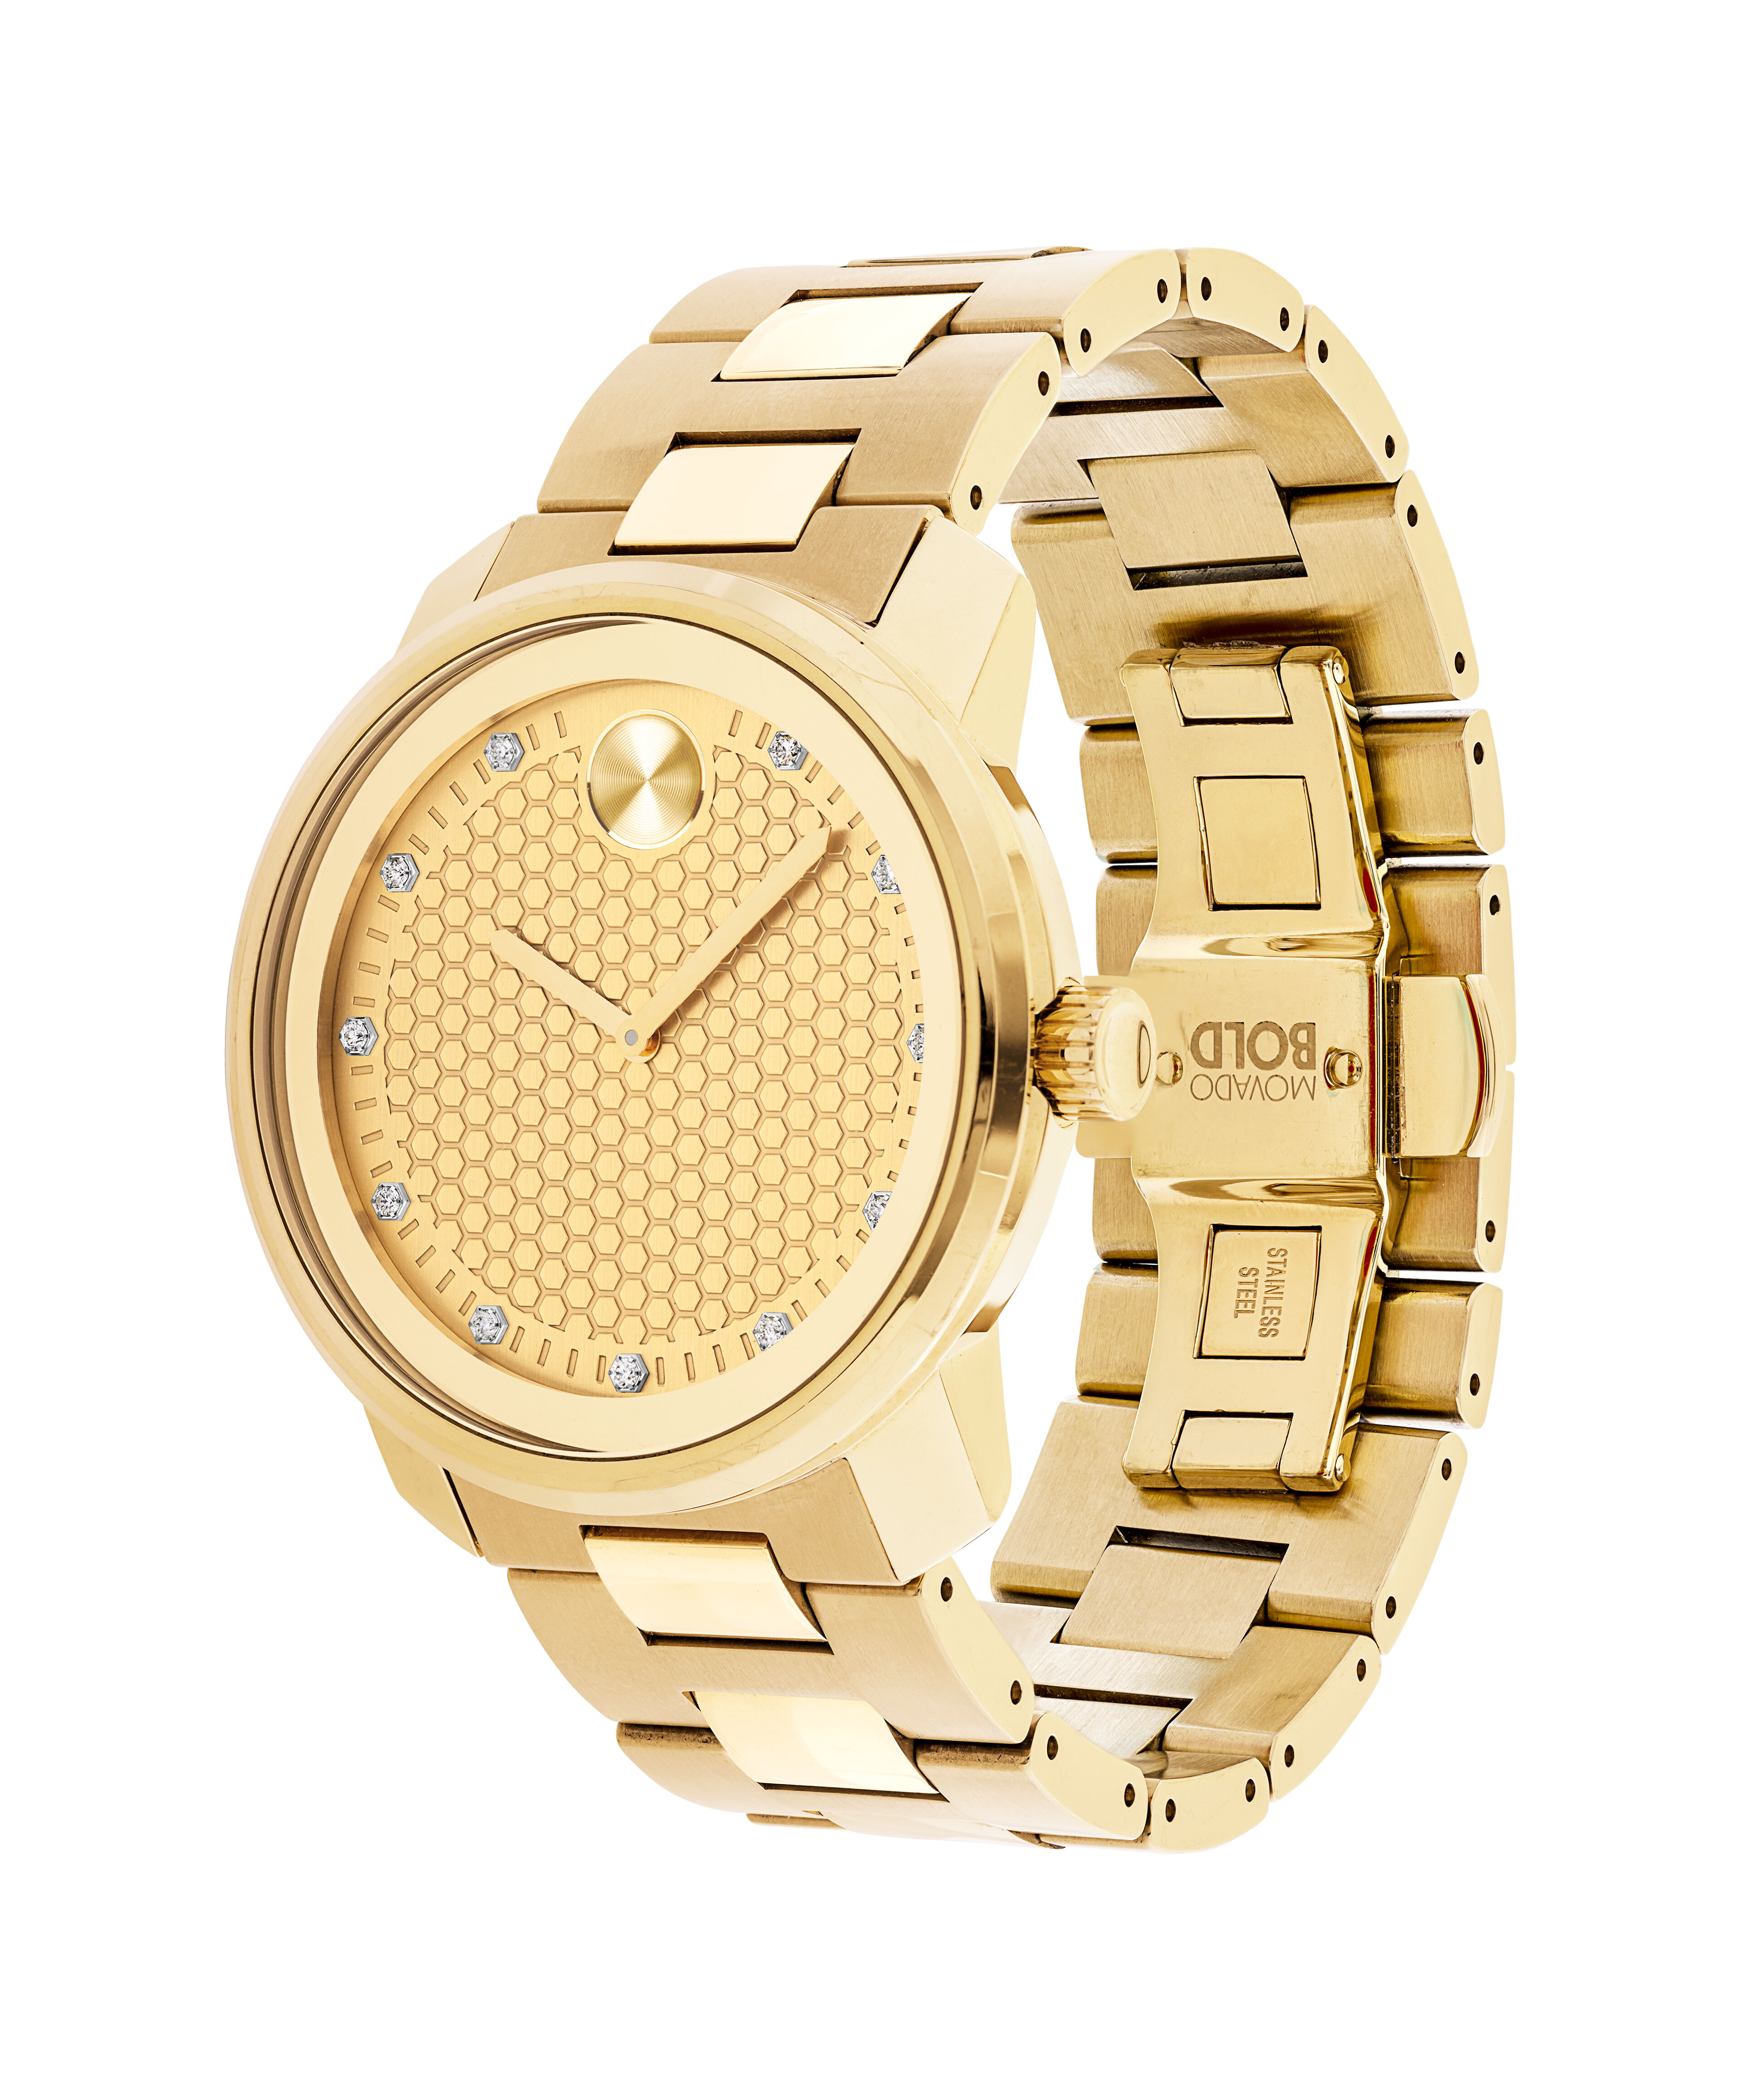 Movado Art Deco 18karat Gold Chronometre Pocket watchMovado Art déco- Années 40